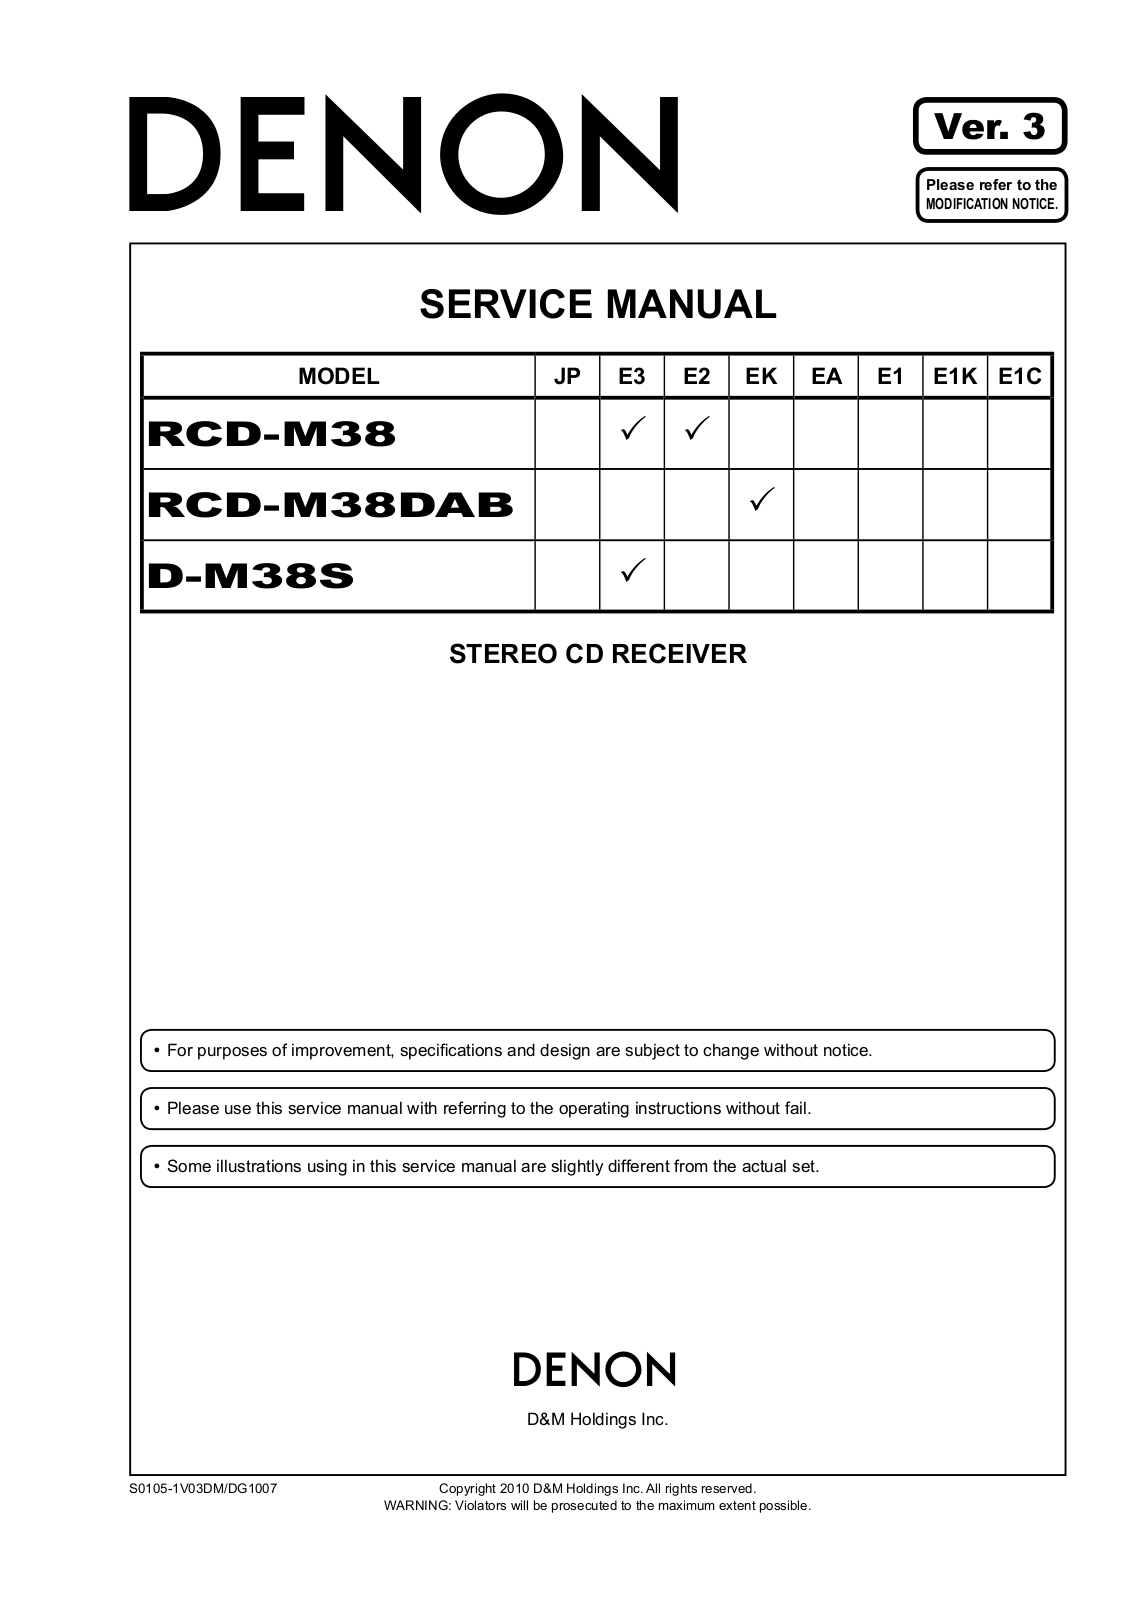 Denon RCD-M38, D-M38S Service Manual